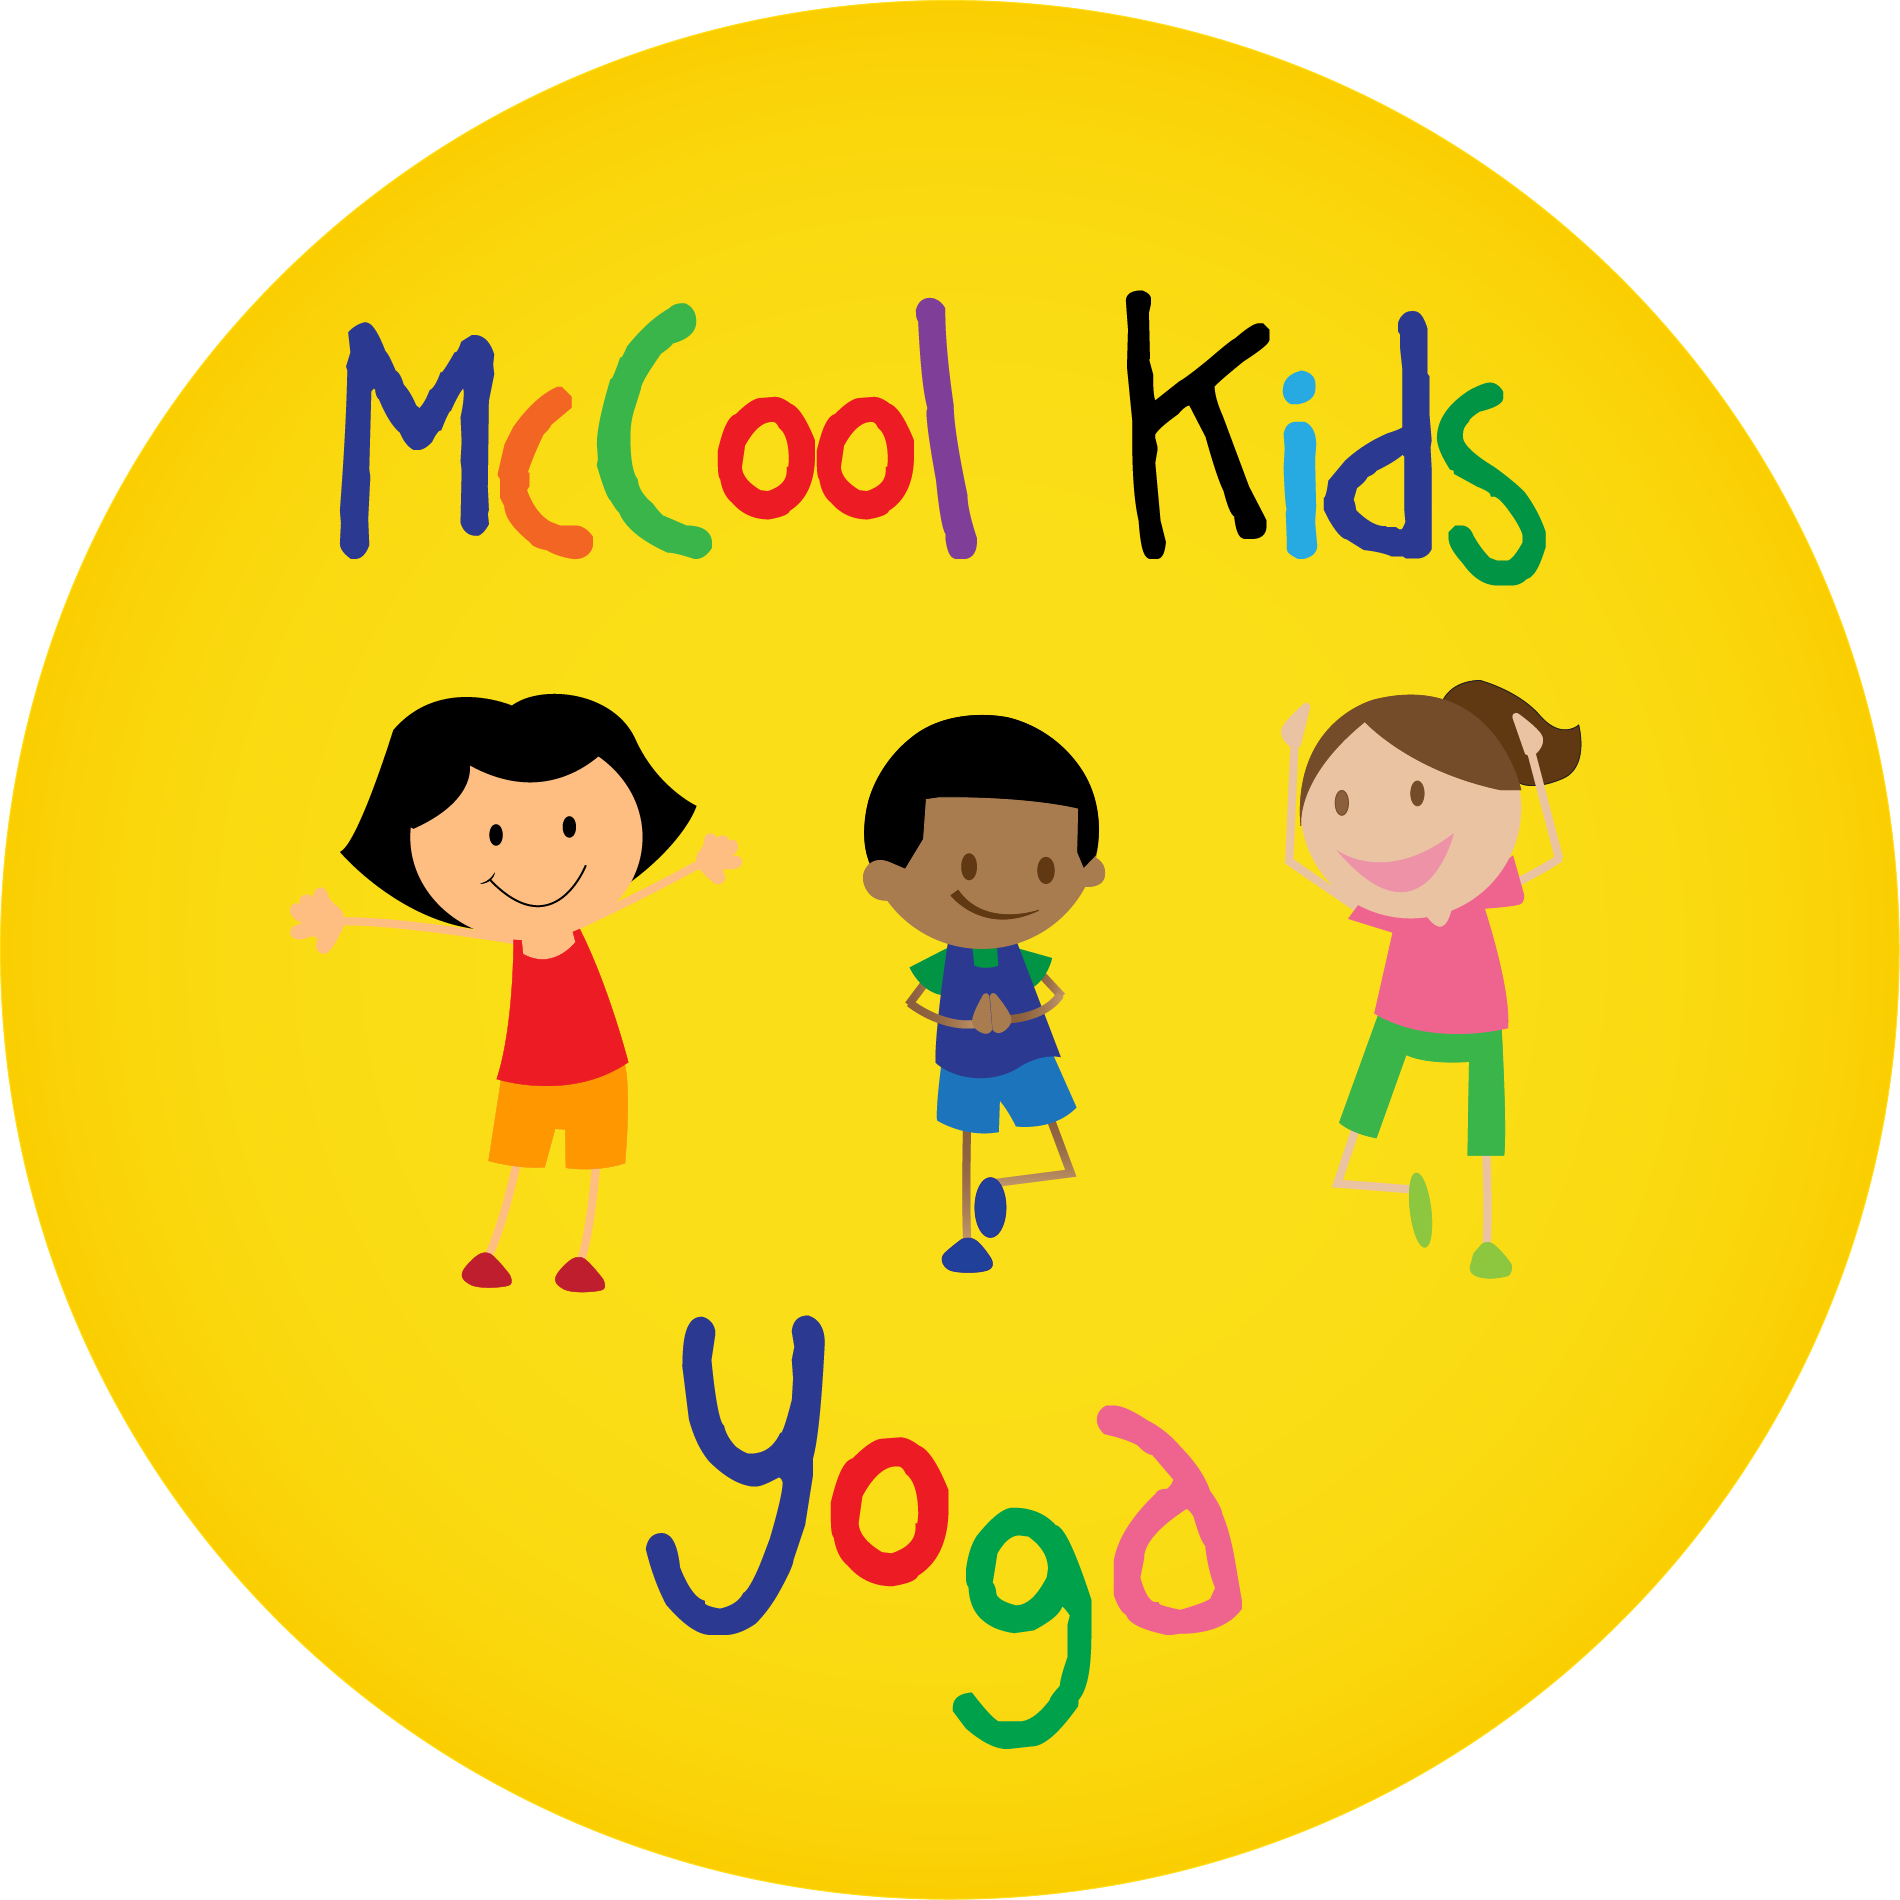 McCool Kids Yoga Atlanta Yoga Classes 4567 Rockbridge Rd SW #971, Pine Lake Georgia 30072